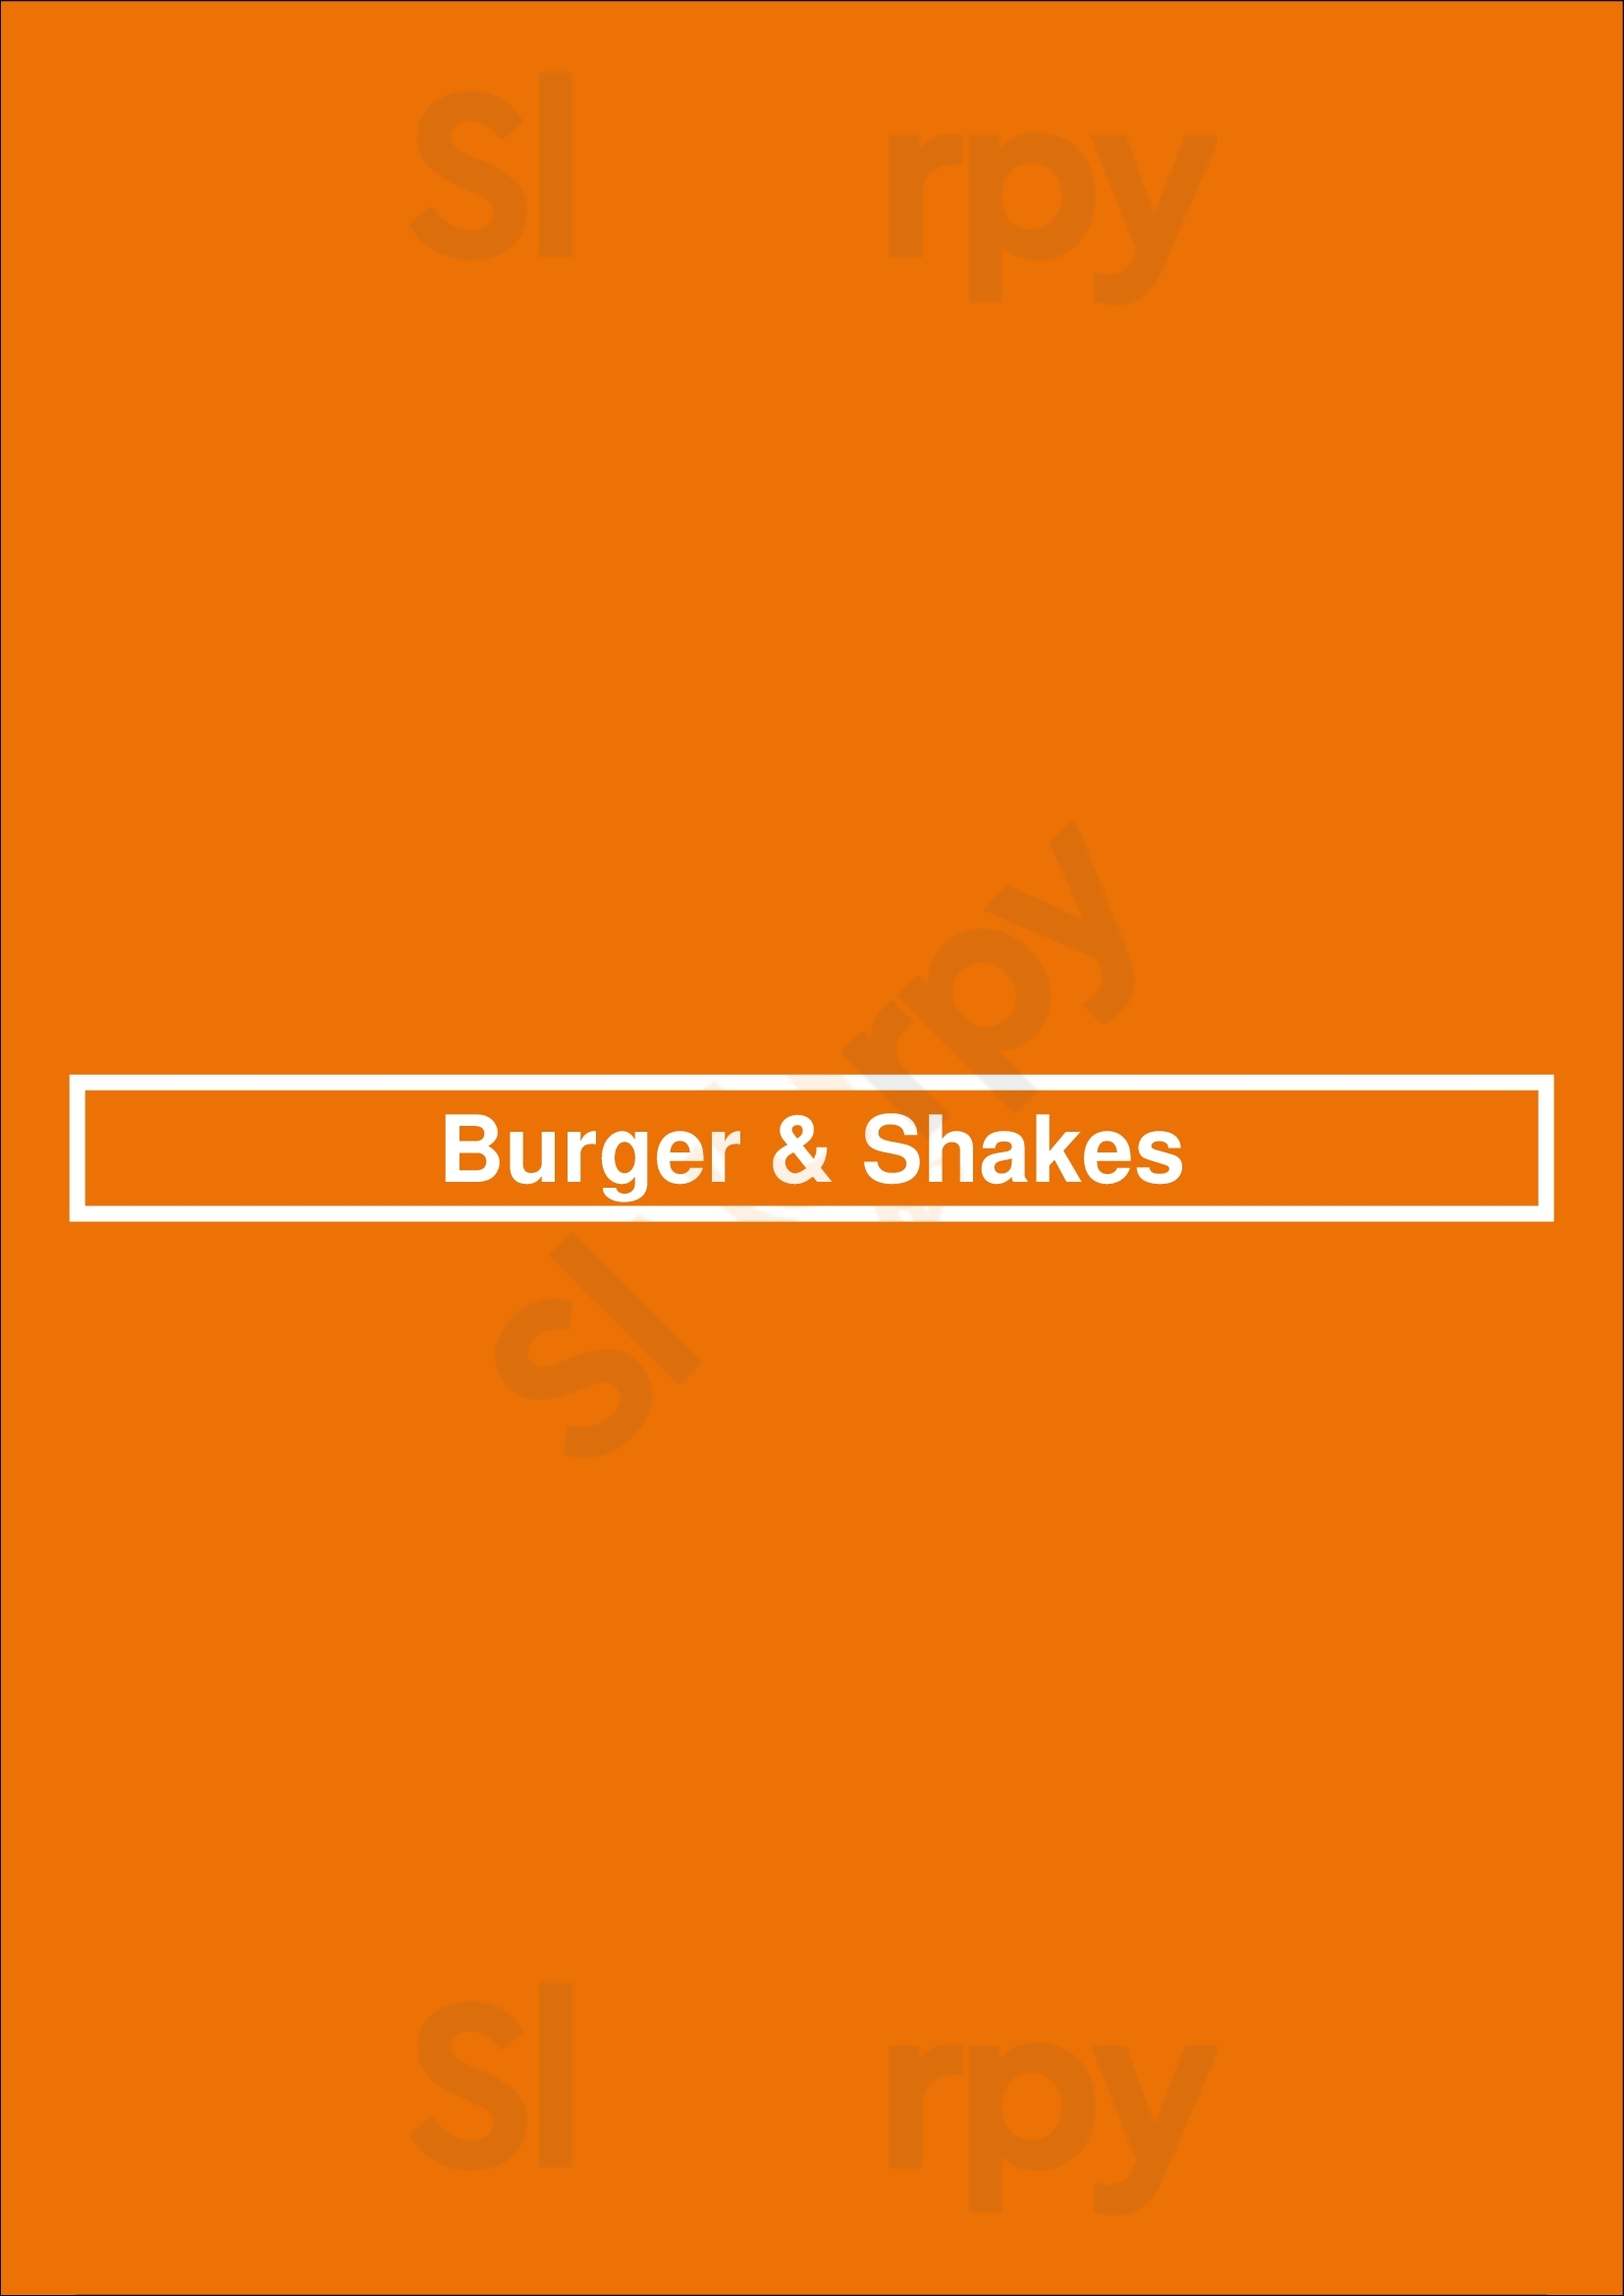 Burger & Shakes Ottawa Menu - 1